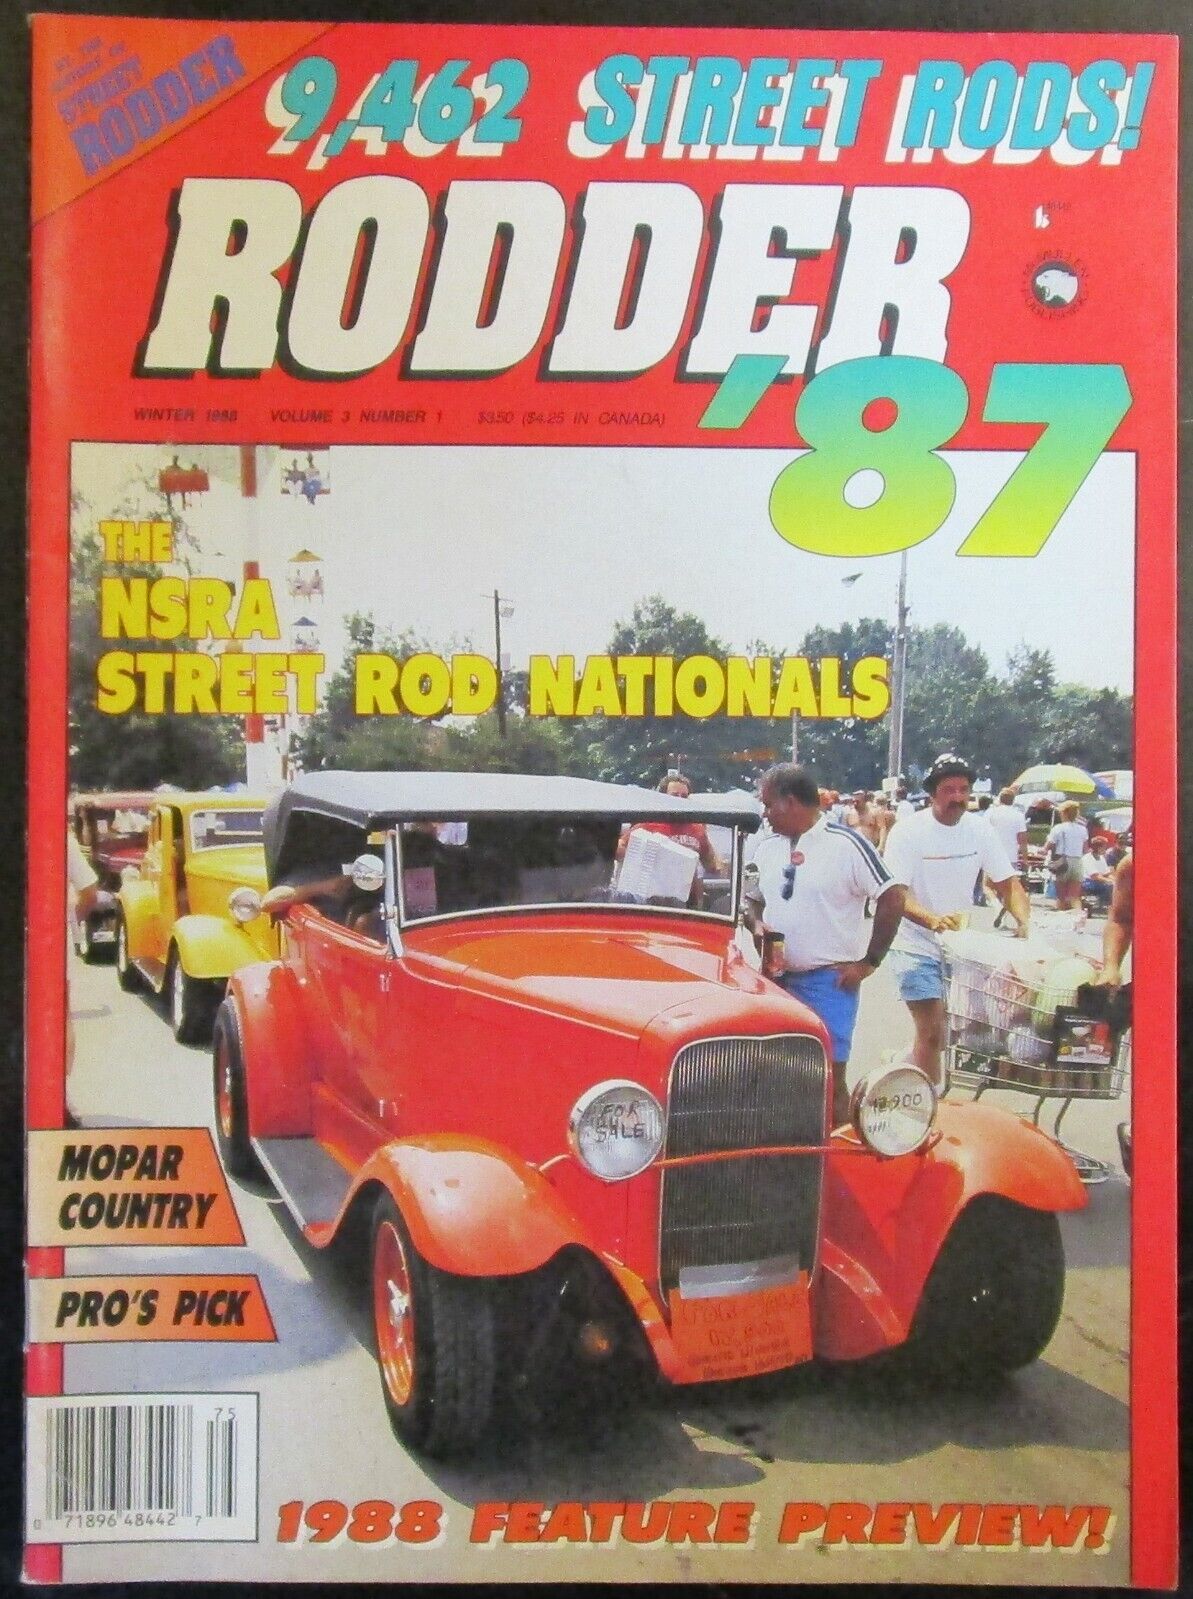 Street Rodder Magazine's Rodder '87 Winter 1988 Volume 3 Number 1